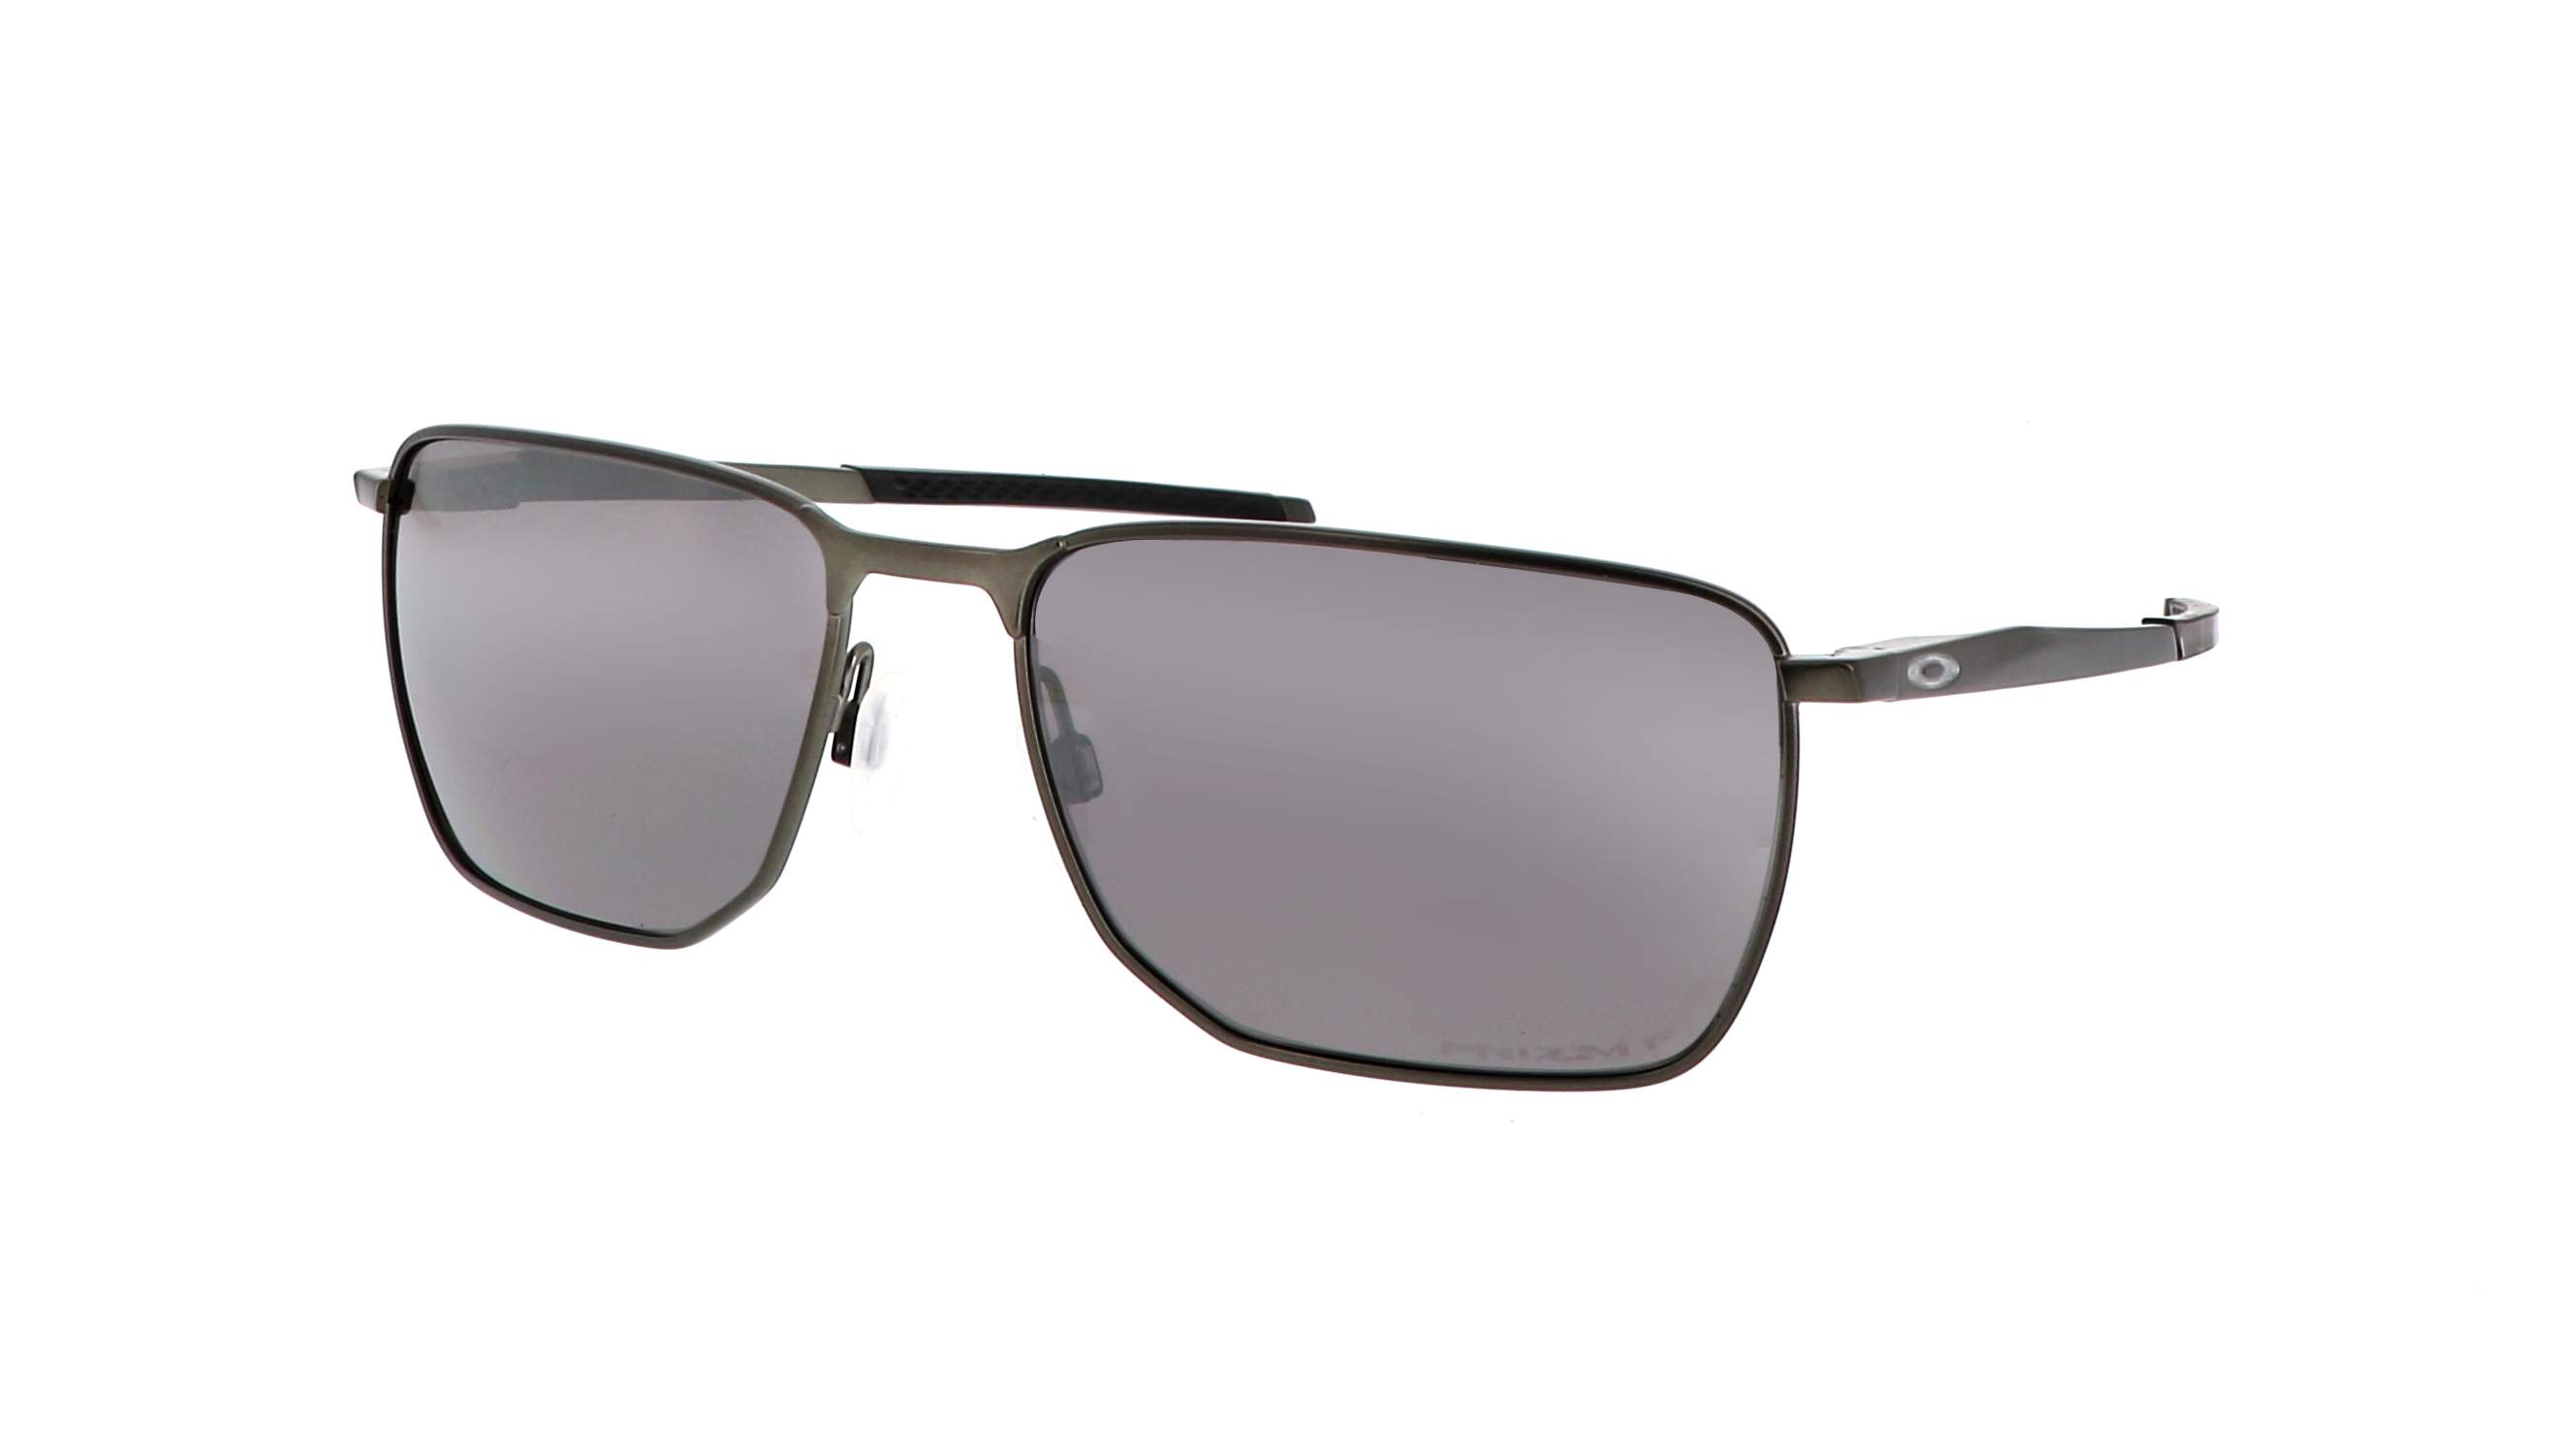 carbon oakley sunglasses